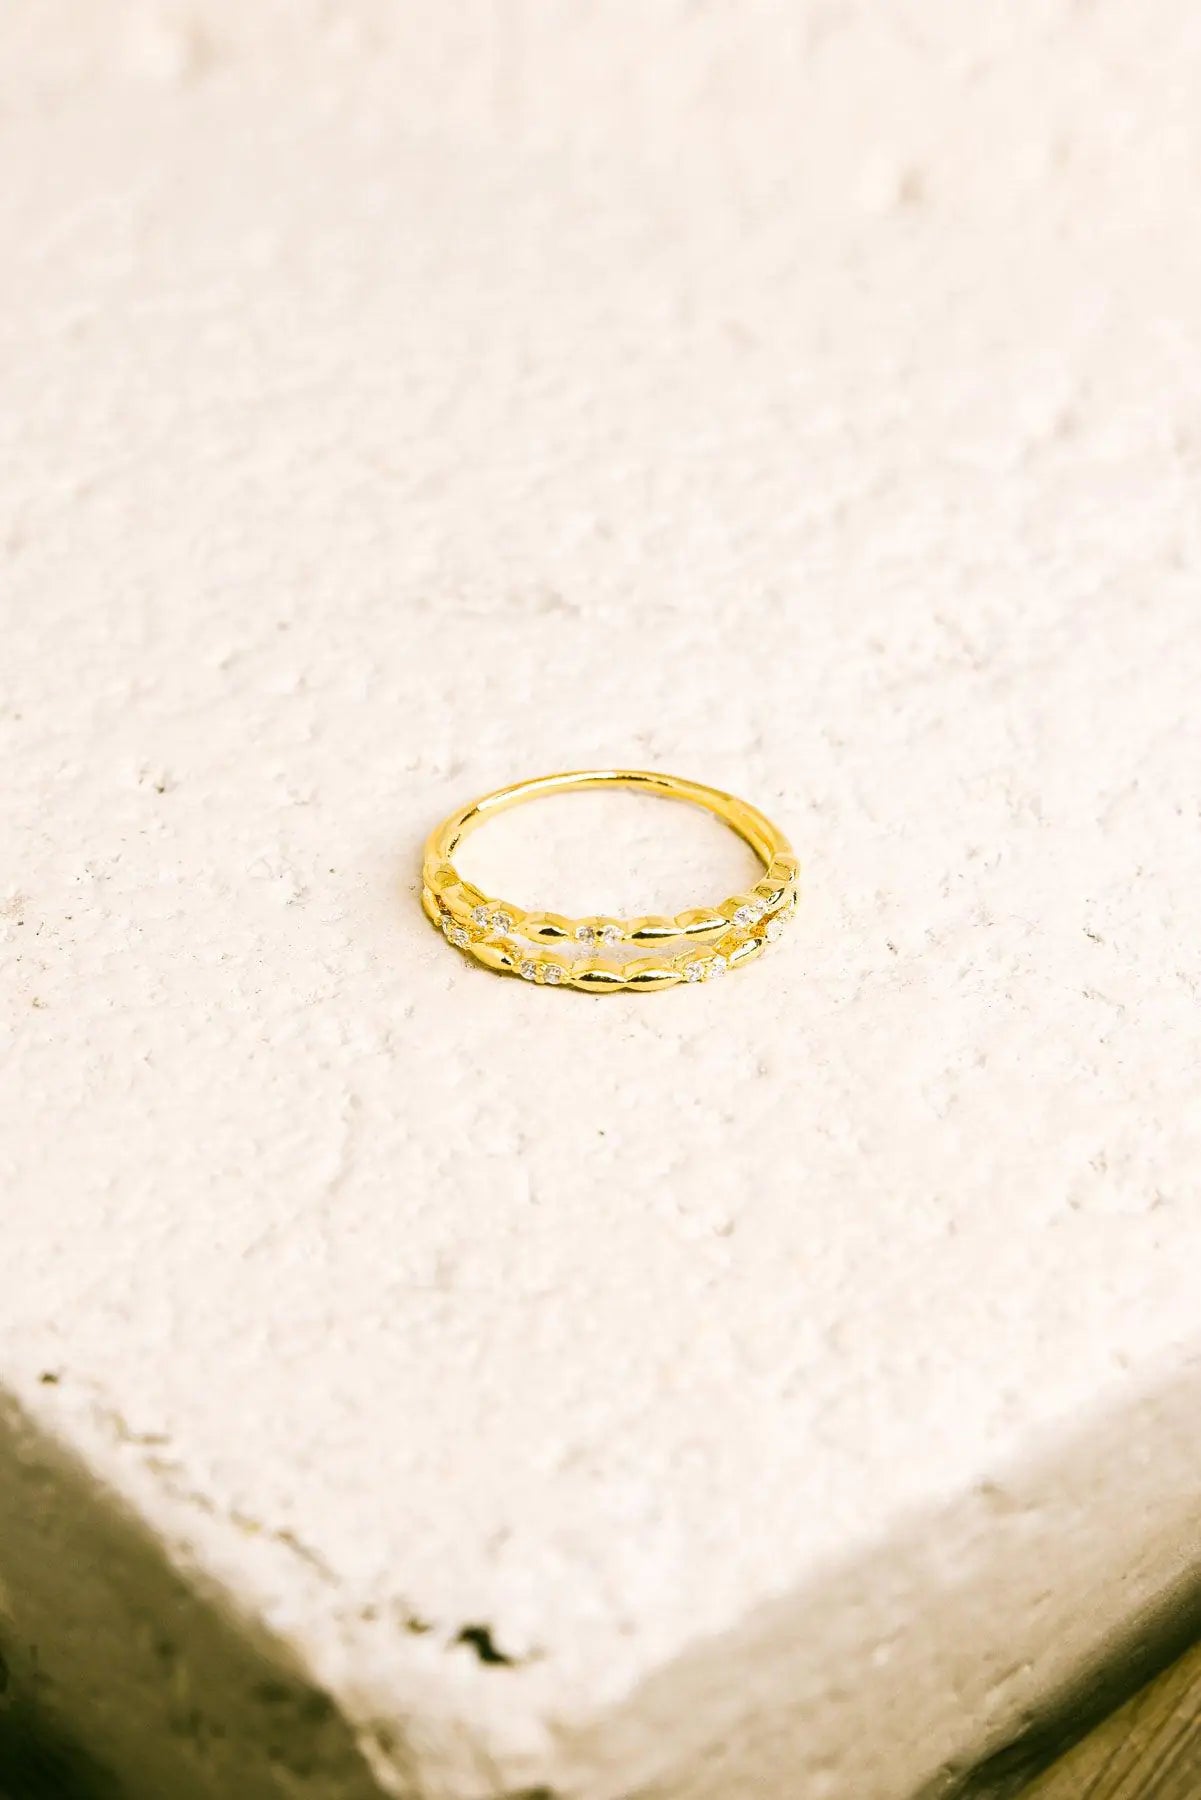 Two Gold Rhinestone Piece Delicate Fashion Ring Set